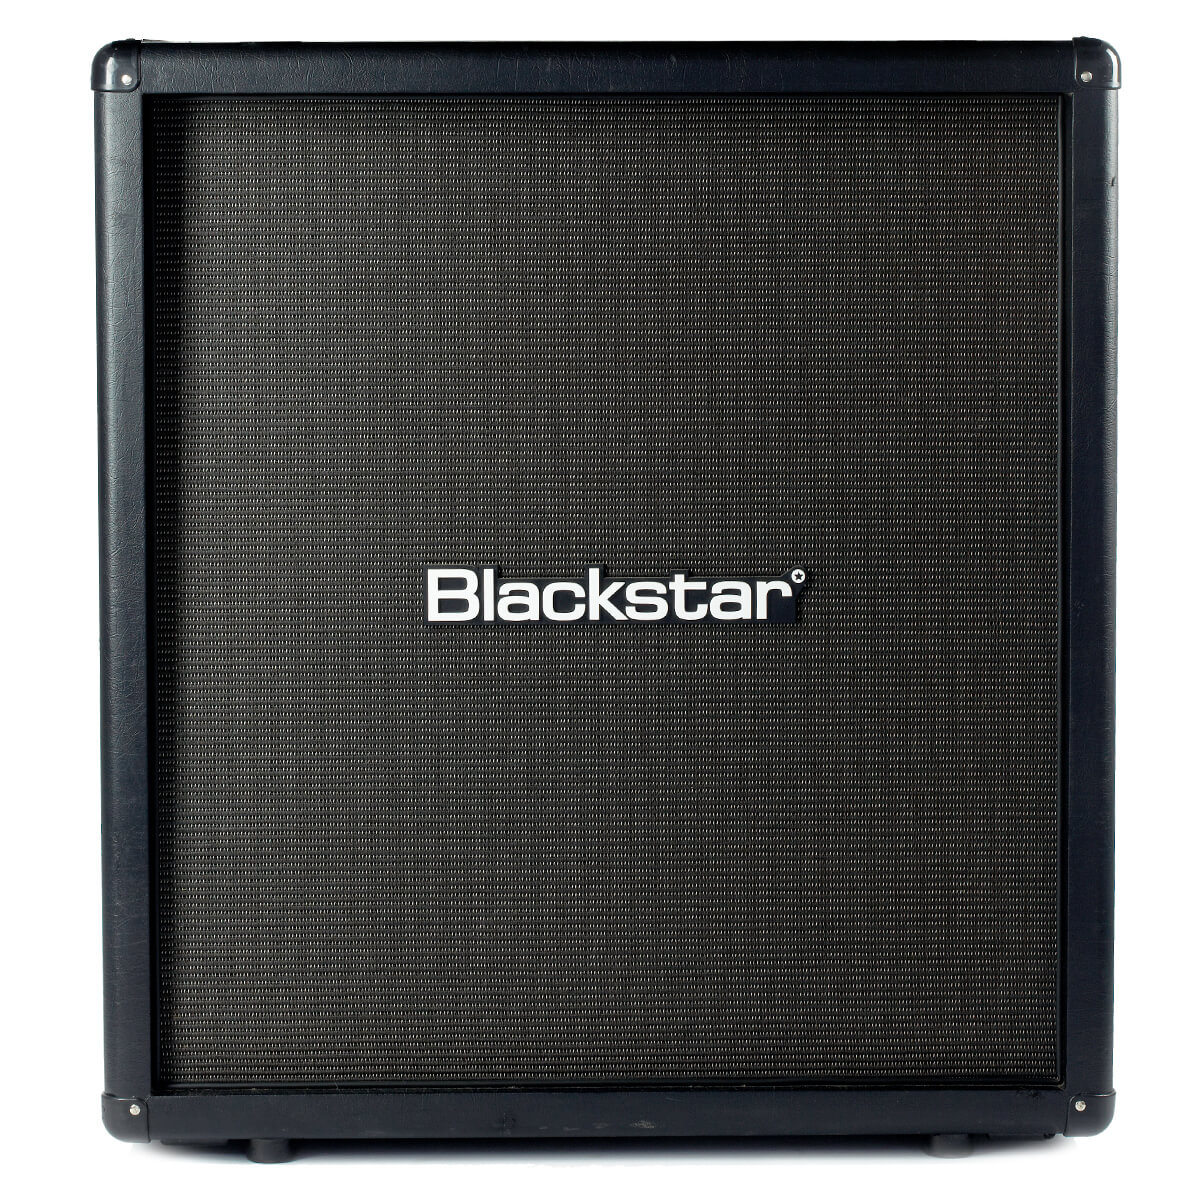 Blackstar Series One 412B